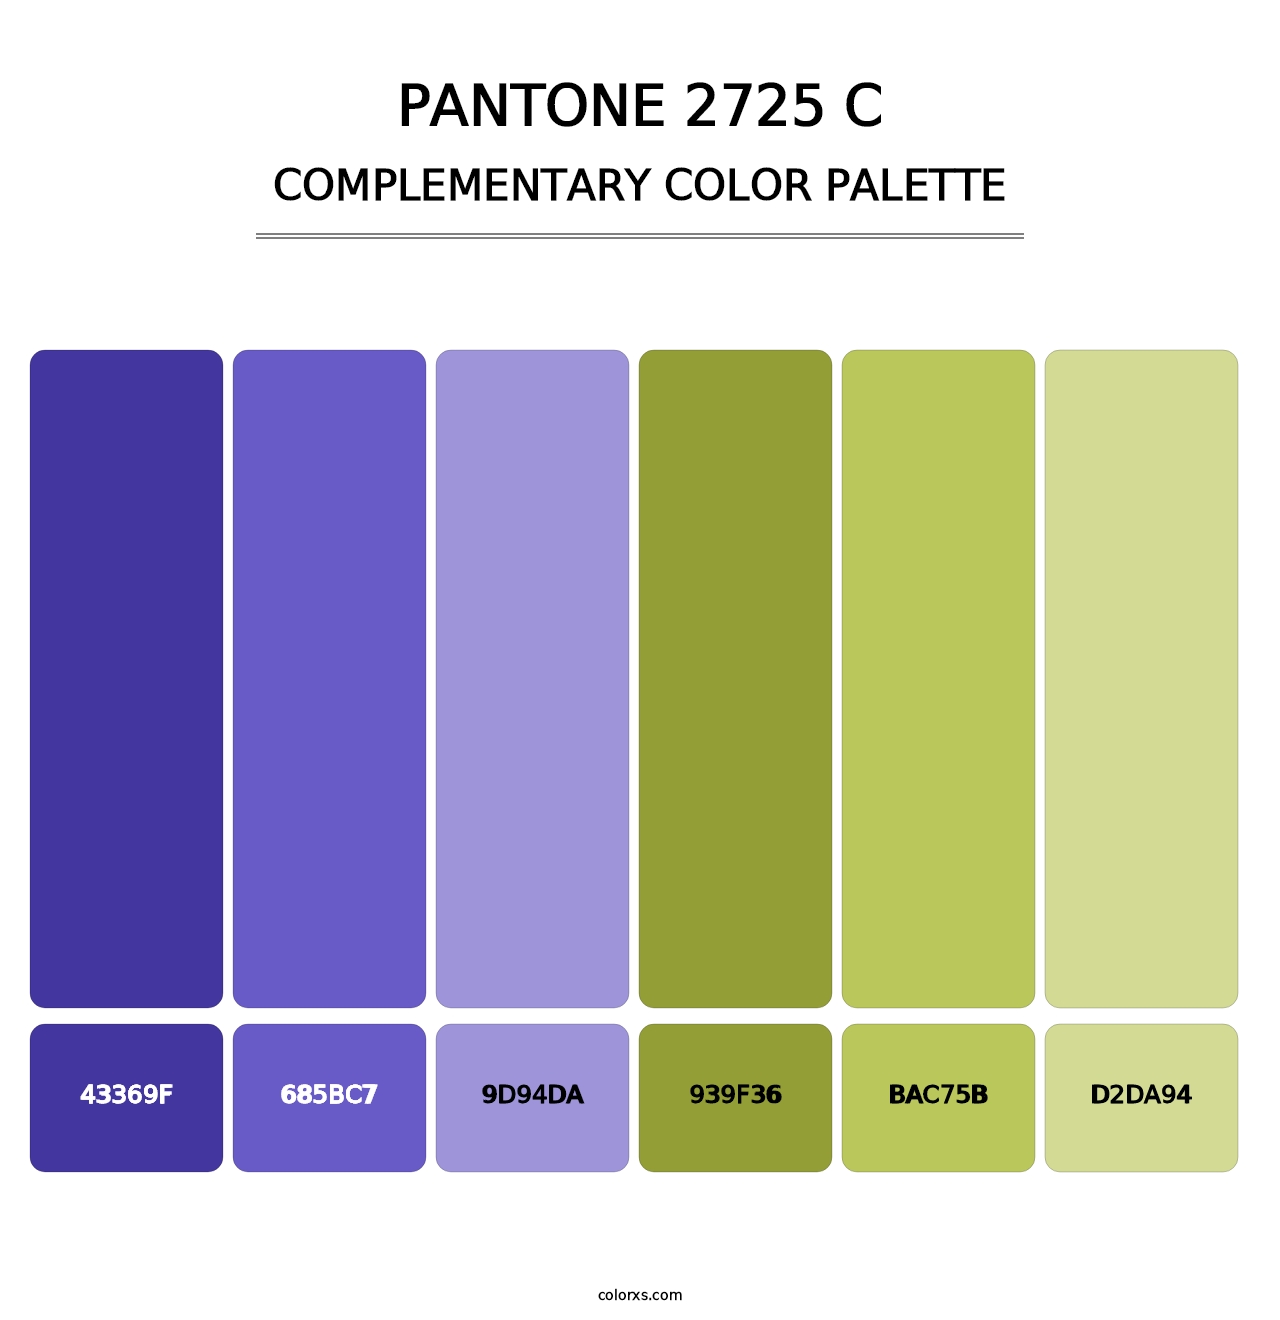 PANTONE 2725 C - Complementary Color Palette